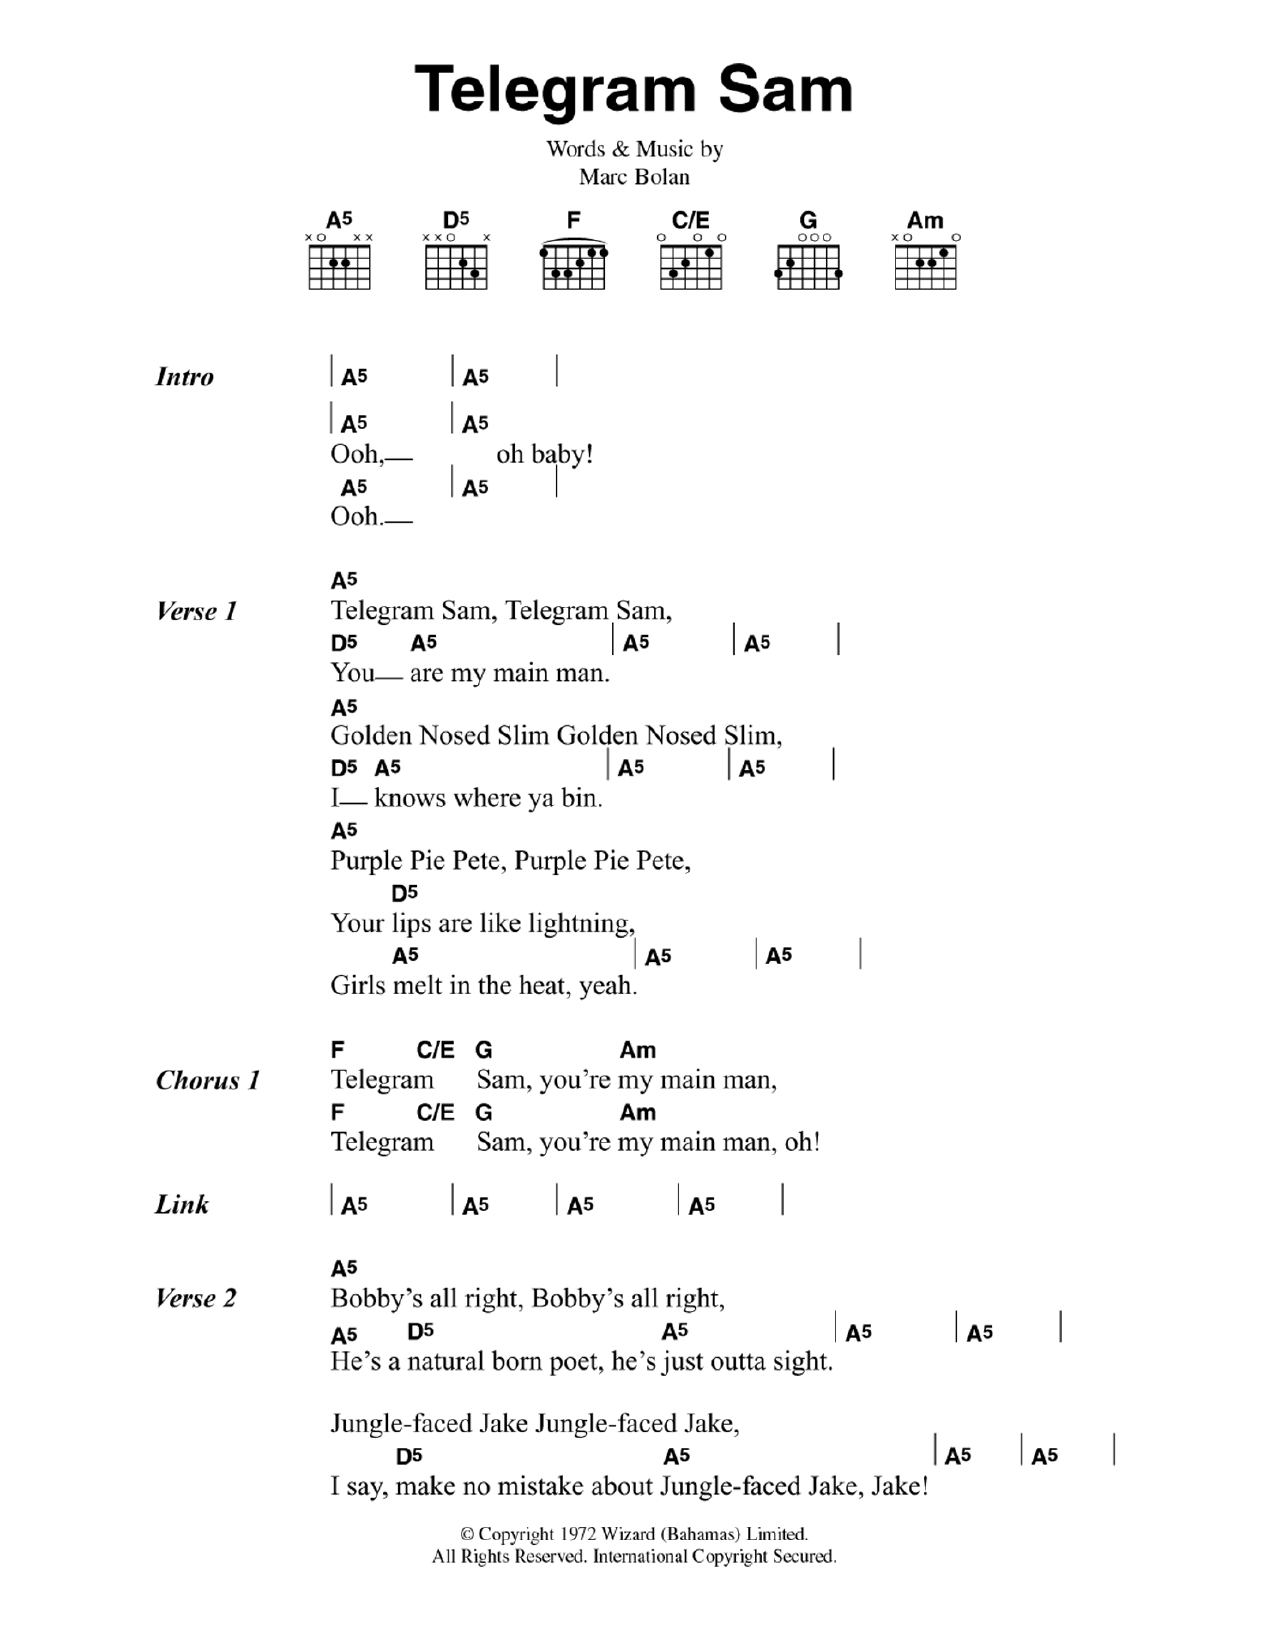 T Rex Telegram Sam Sheet Music Notes & Chords for Guitar Tab - Download or Print PDF